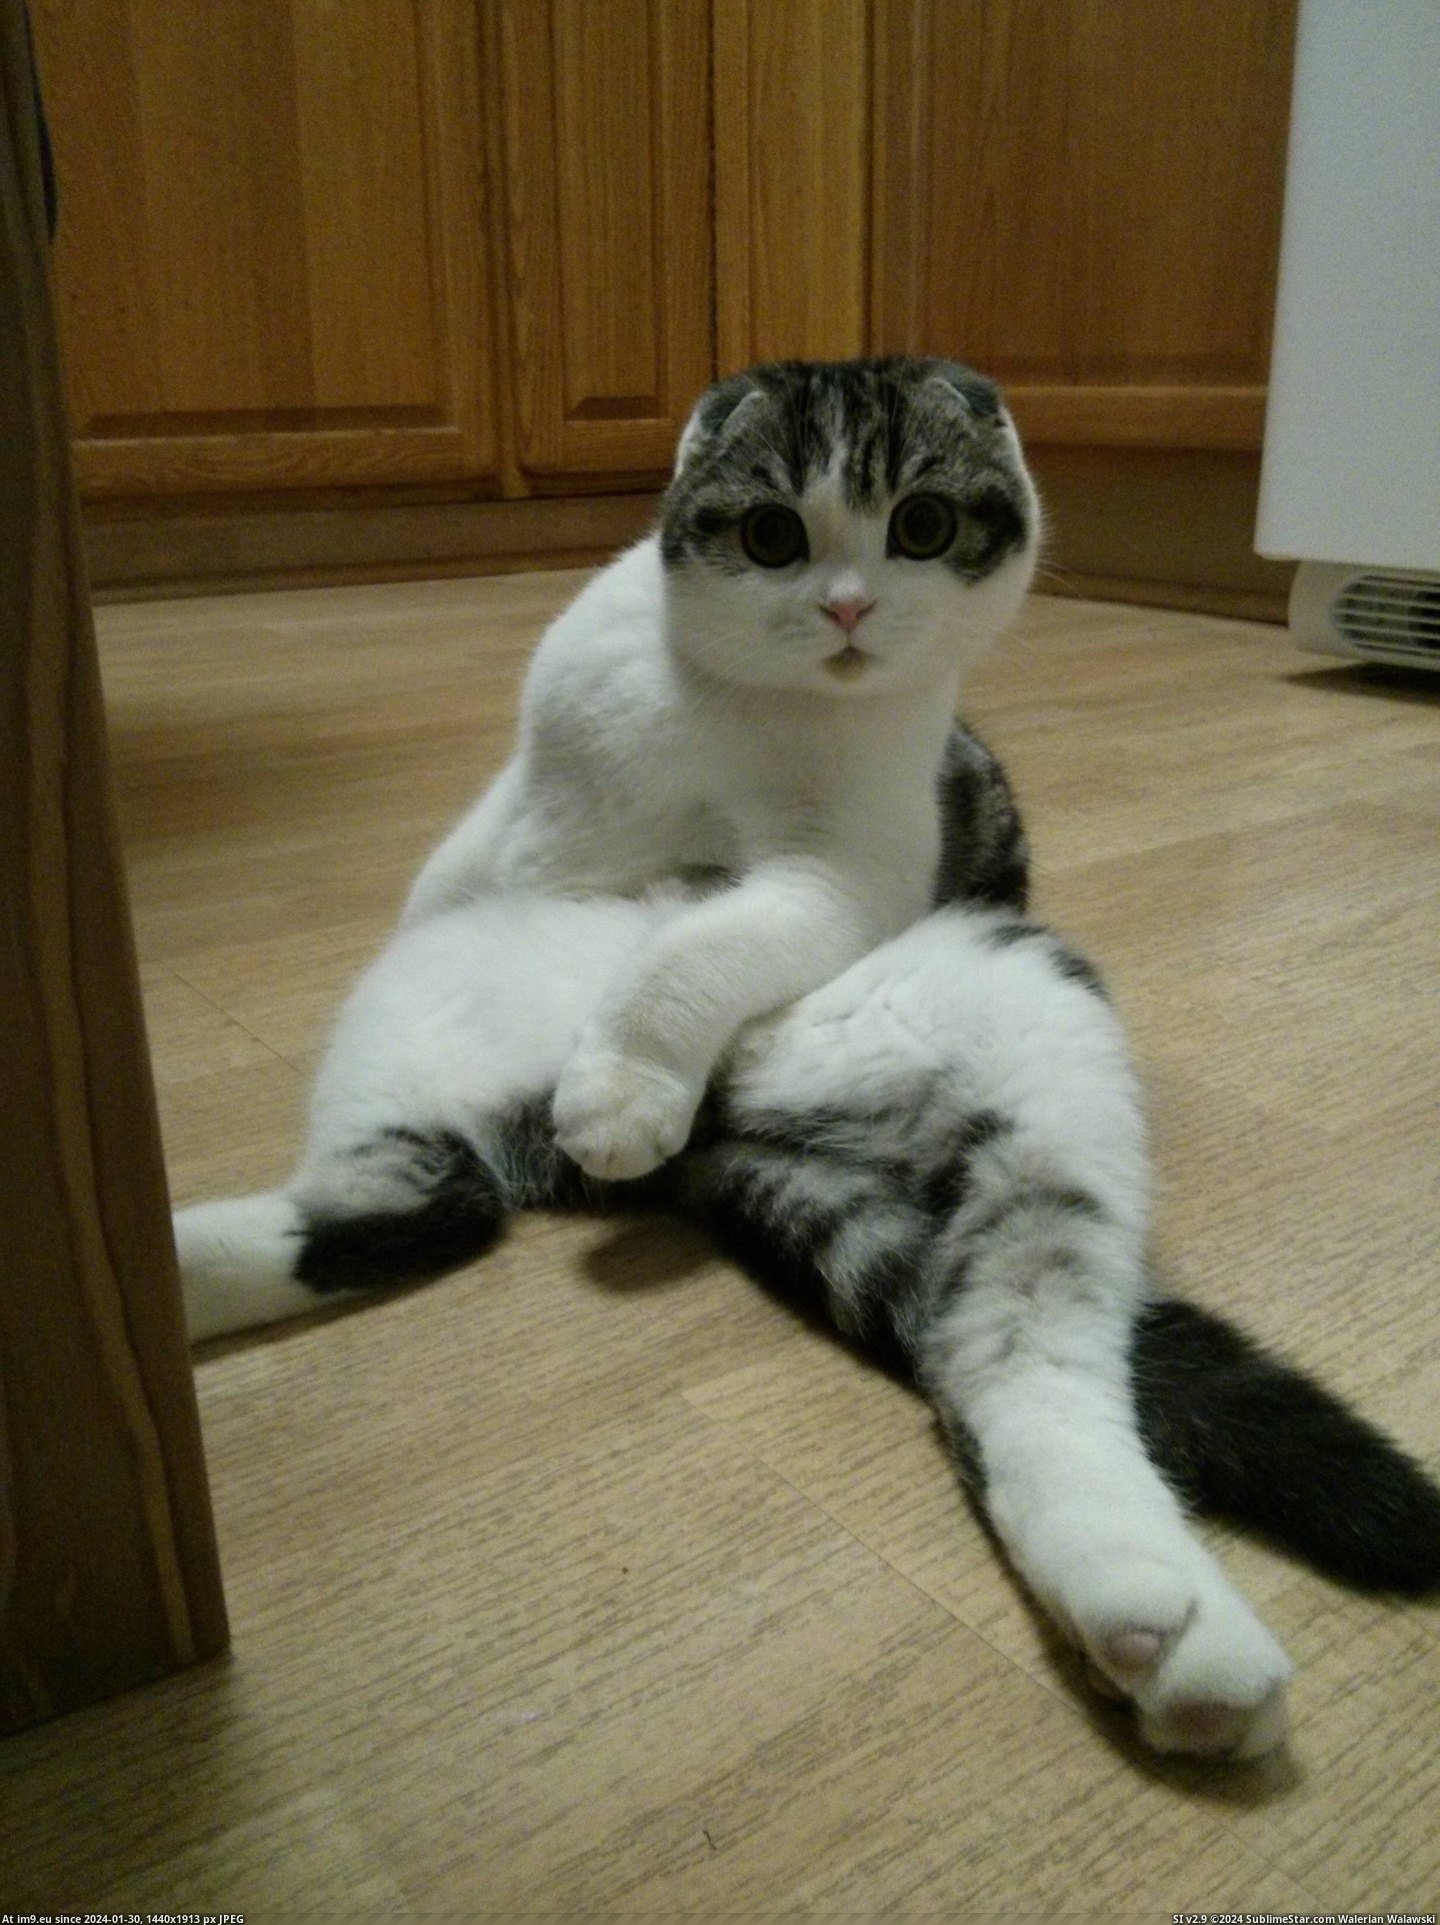 #Butt #Sits #Cat [Aww] My cat always sits on his butt. 4 Pic. (Obraz z album My r/AWW favs))